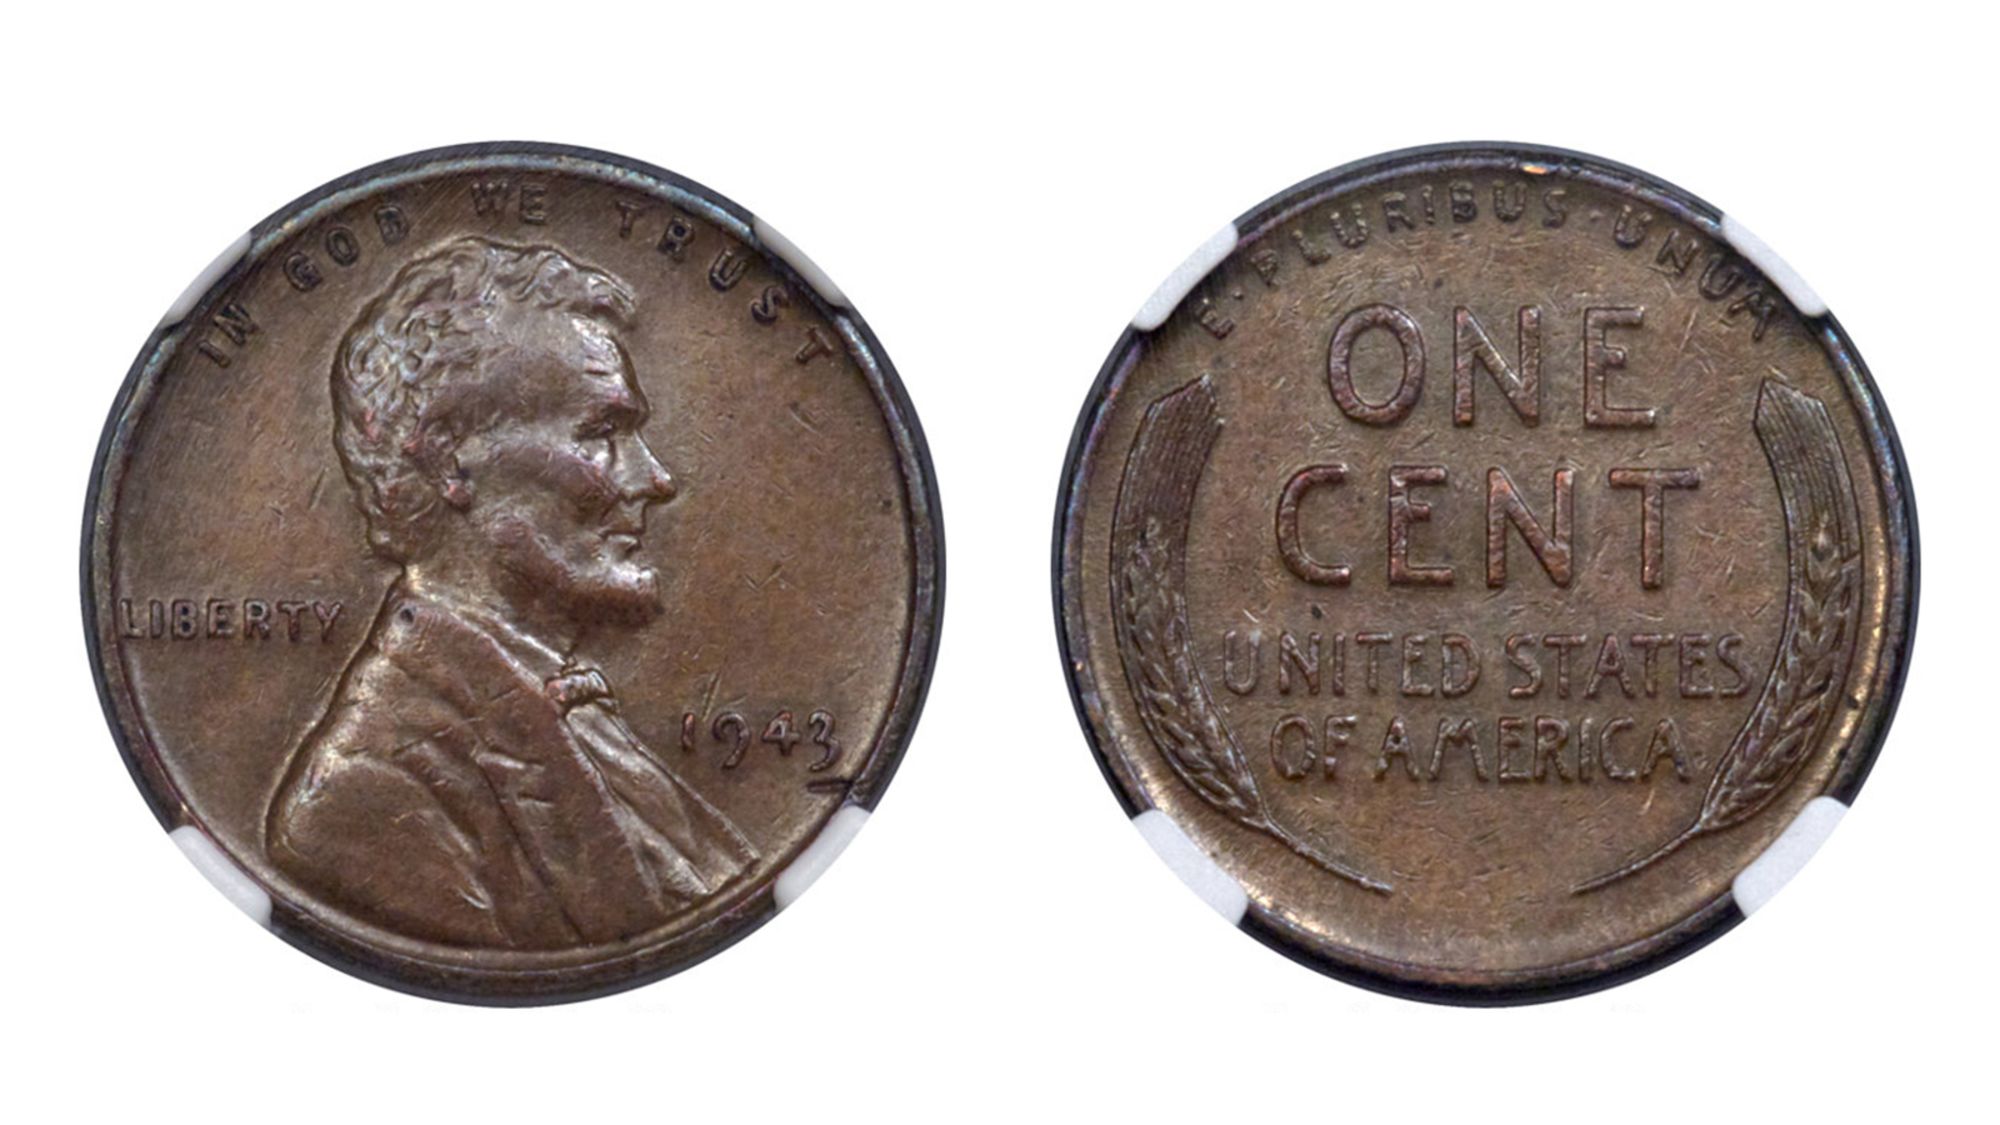 Rare 1943 copper coin fetches a pretty penny in auction: $204,000